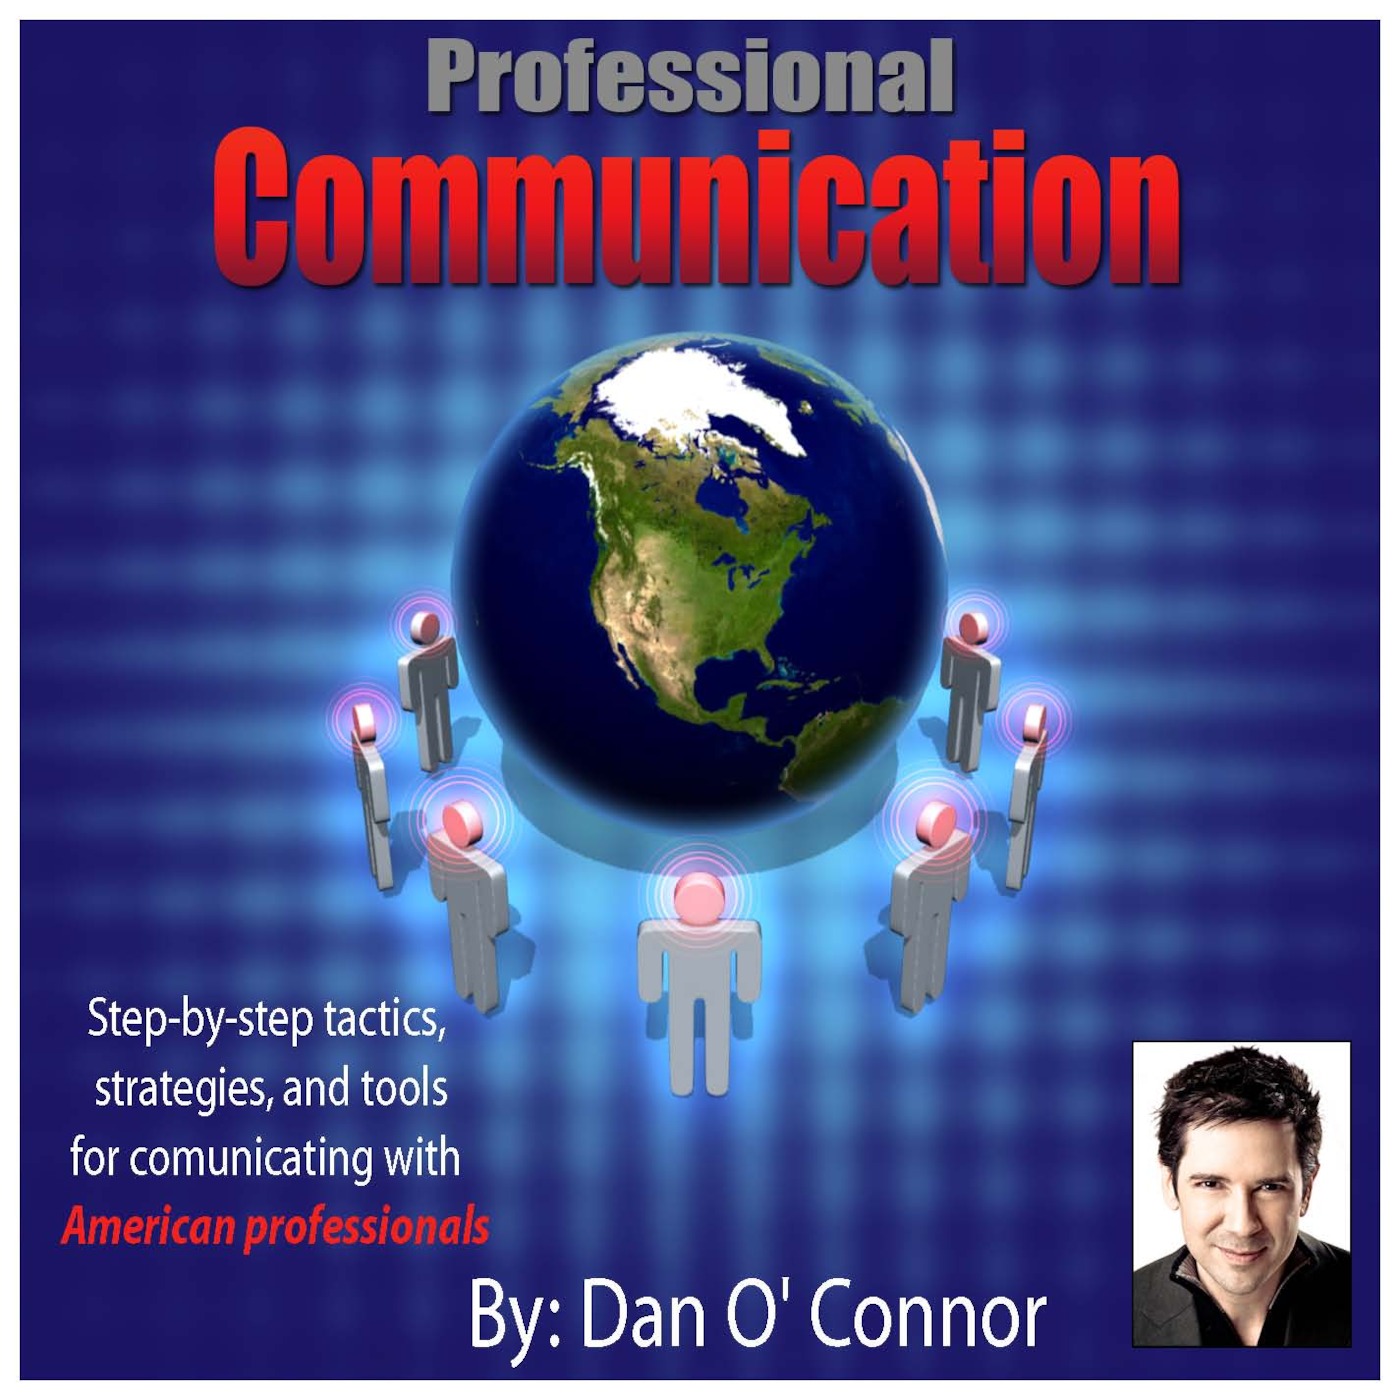 Professional Communication Training